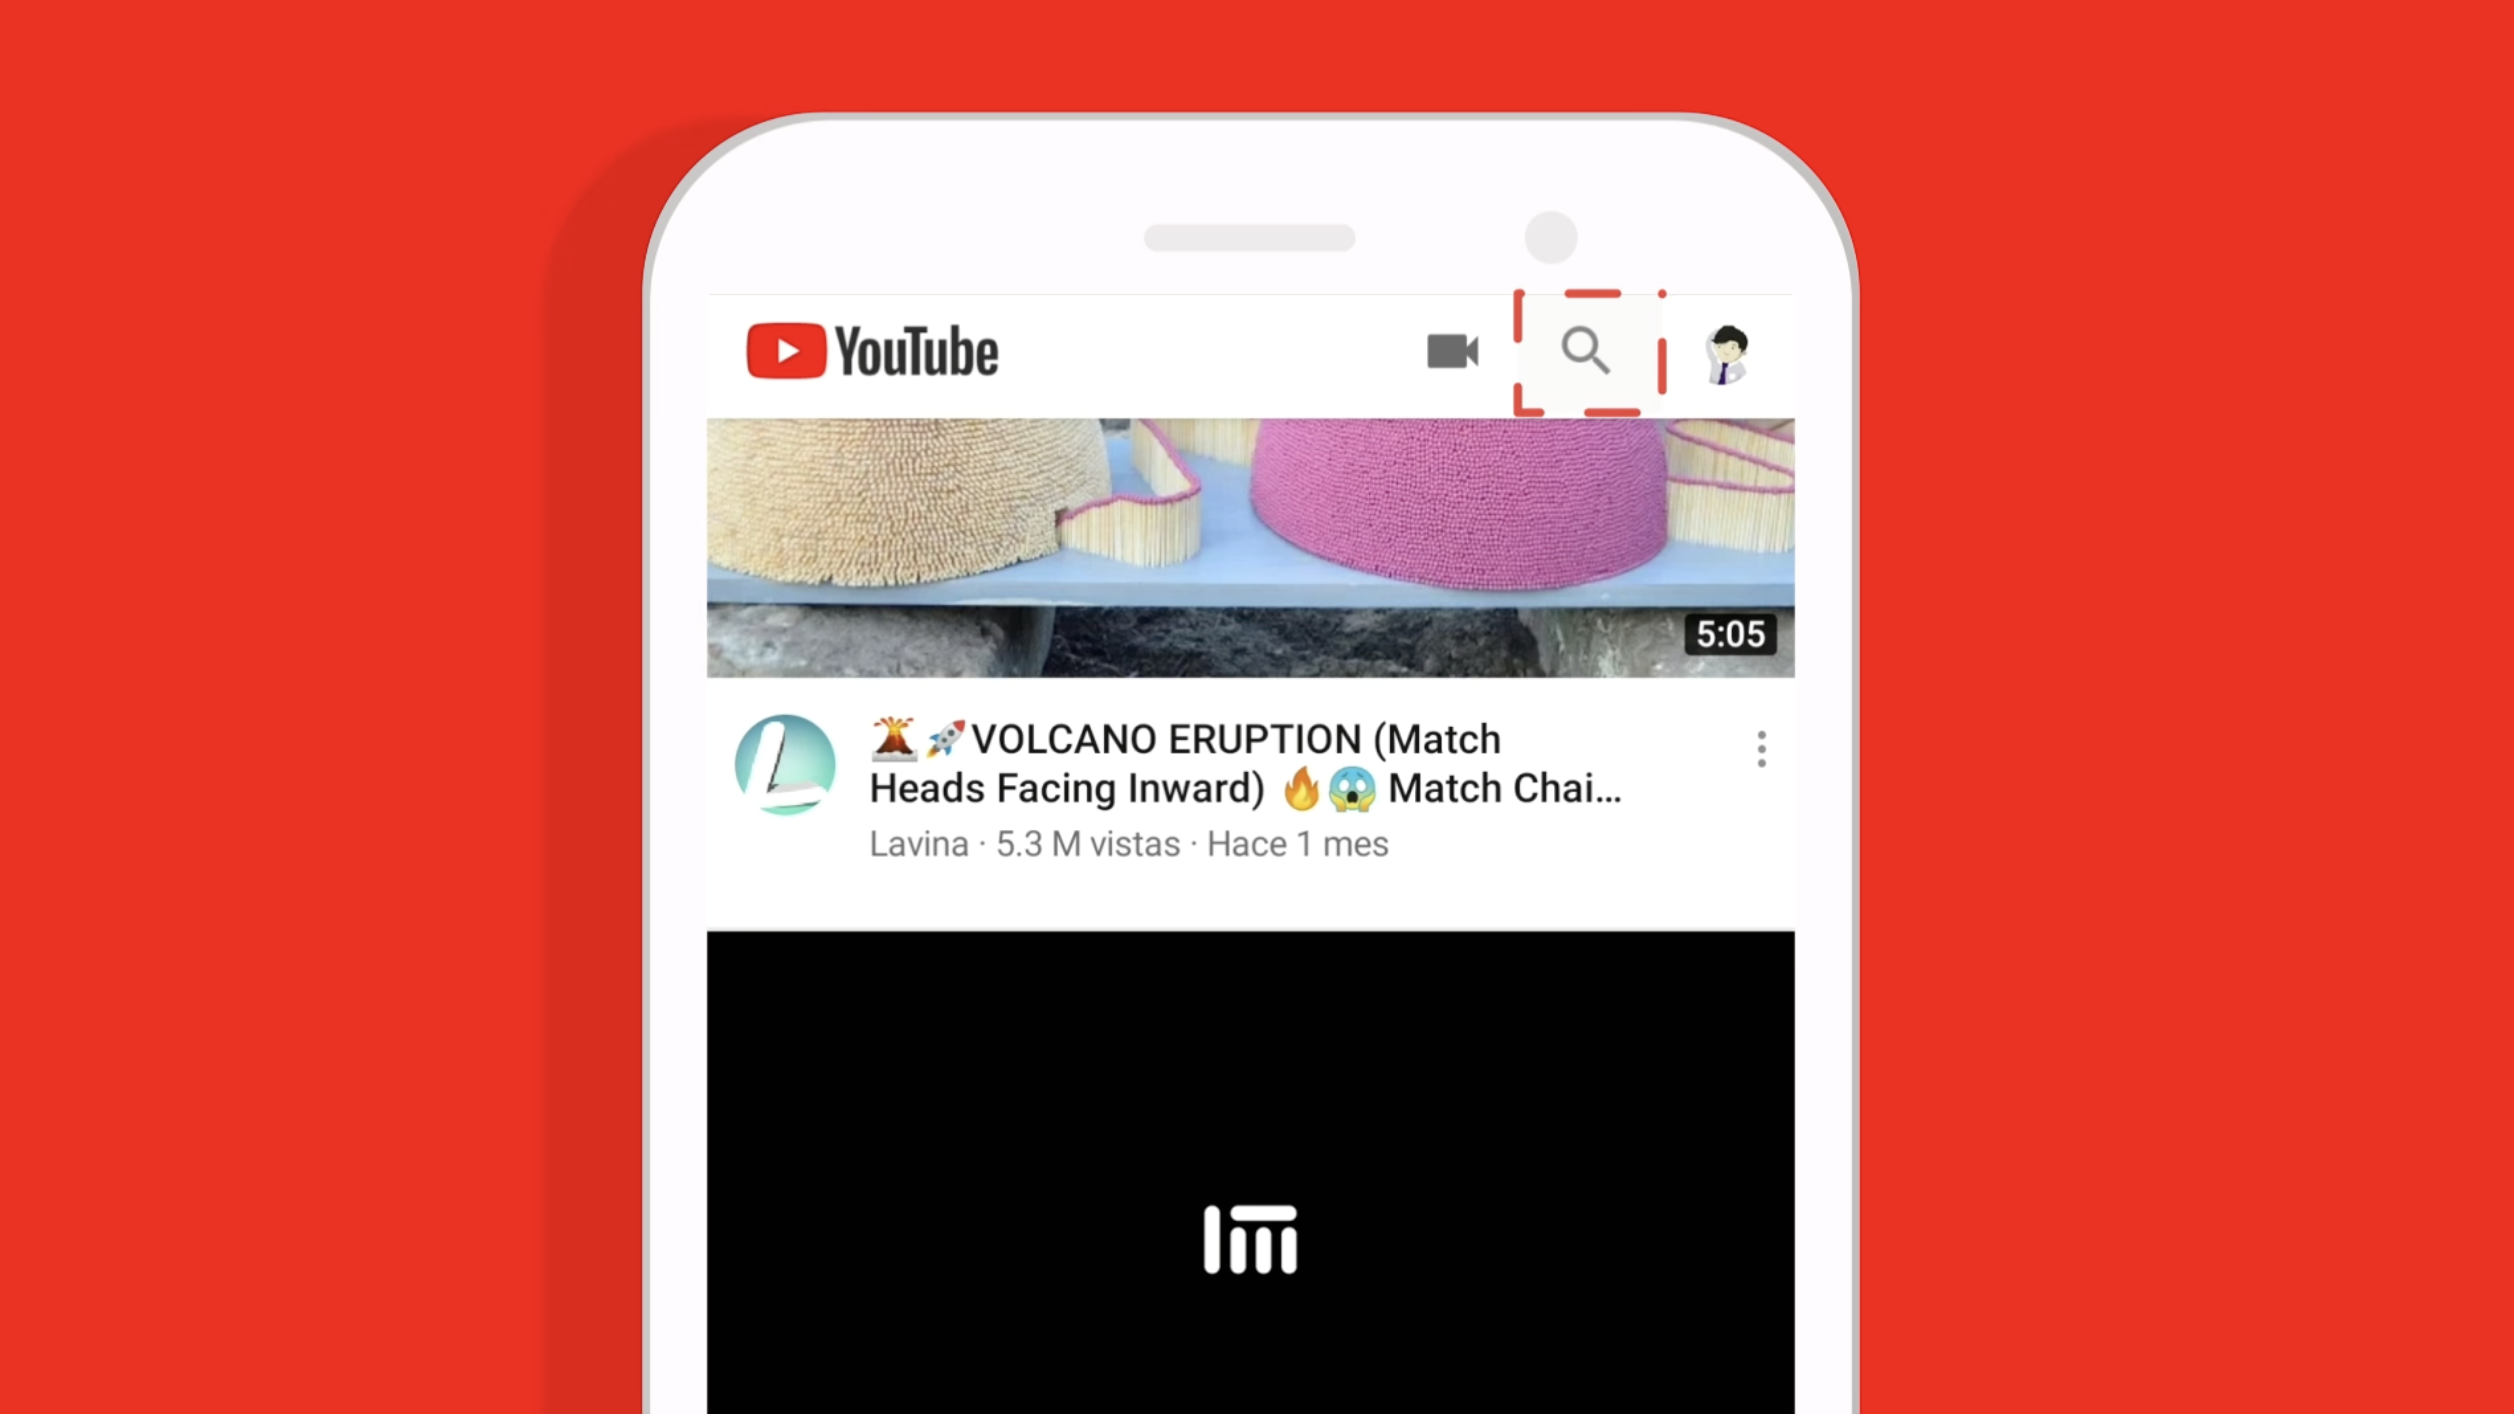 Curso de YouTube: YouTube en dispositivos móviles - Como Poner La Pantalla De Youtube Normal